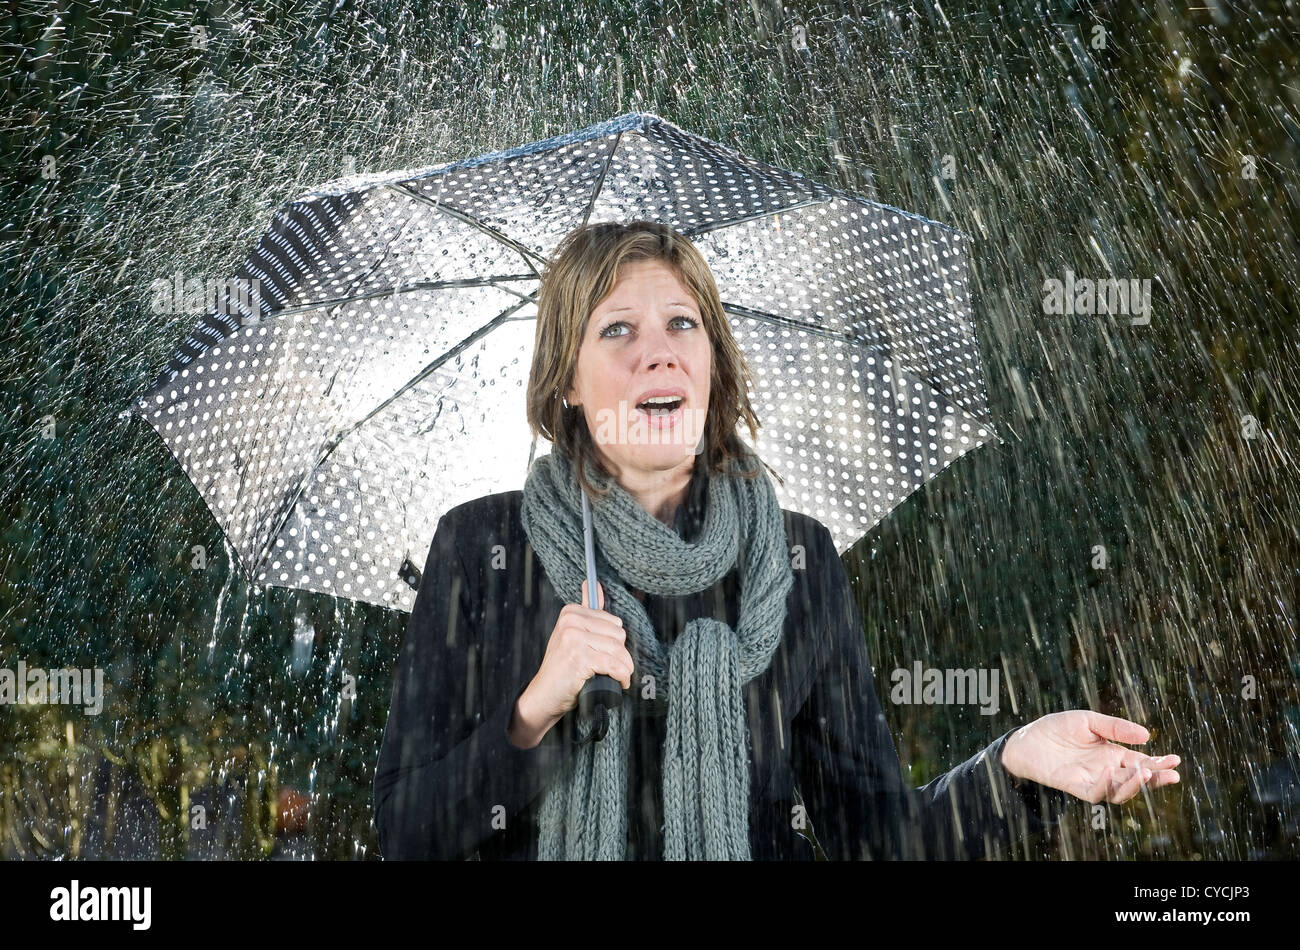 A woman under an umbrella during heavy rainfall Stock Photo